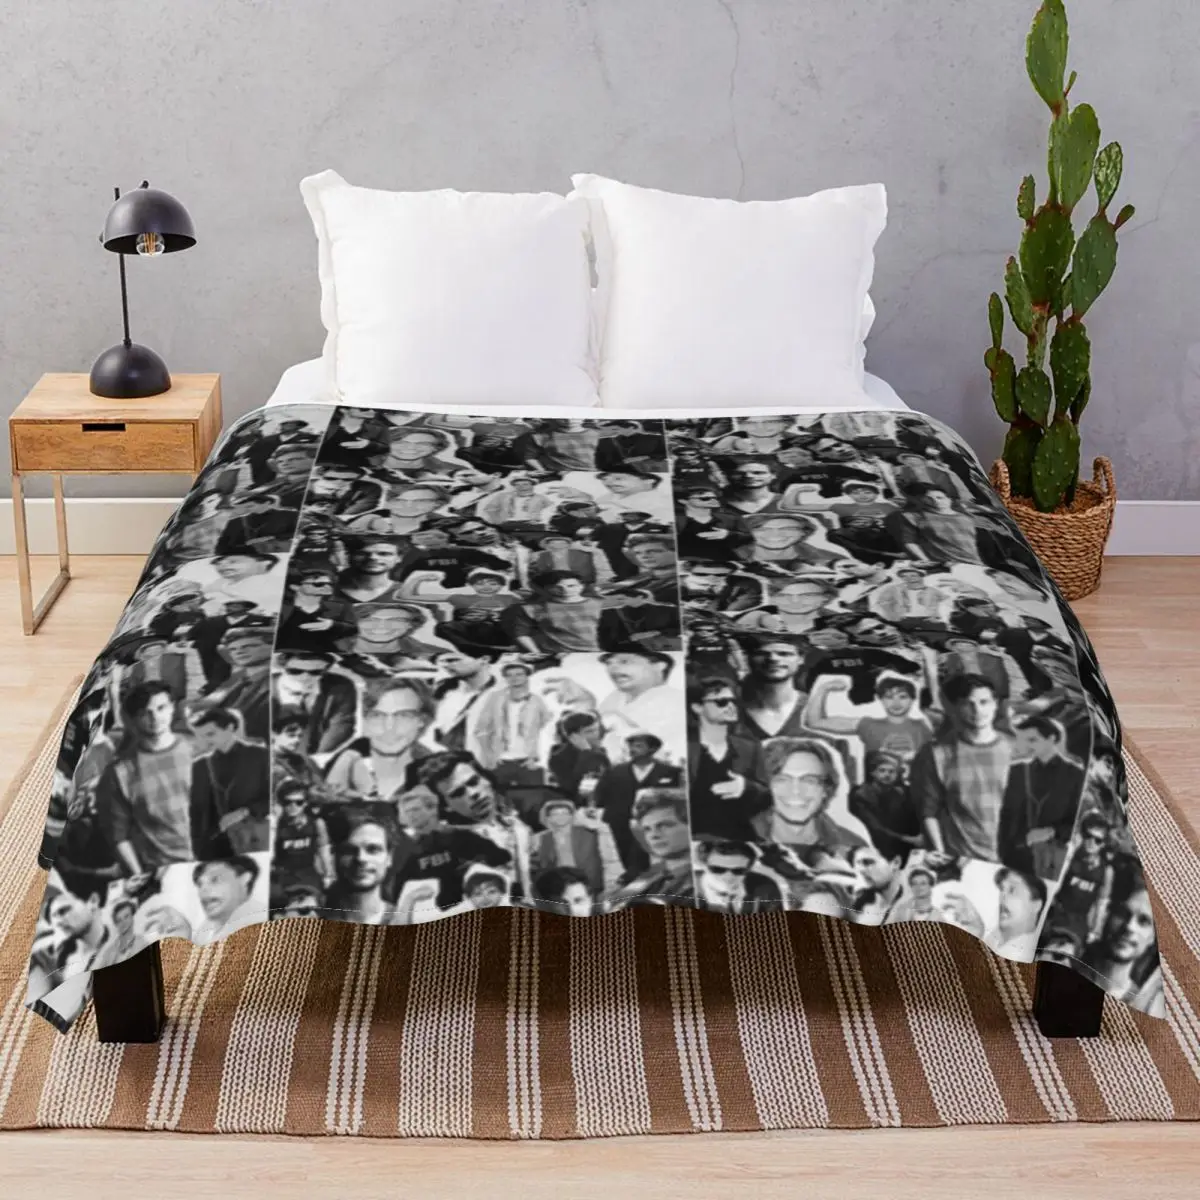 Matthew Gray Gubler Blanket Fleece Printed Super Soft Unisex Throw Blankets for Bedding Sofa Camp Office